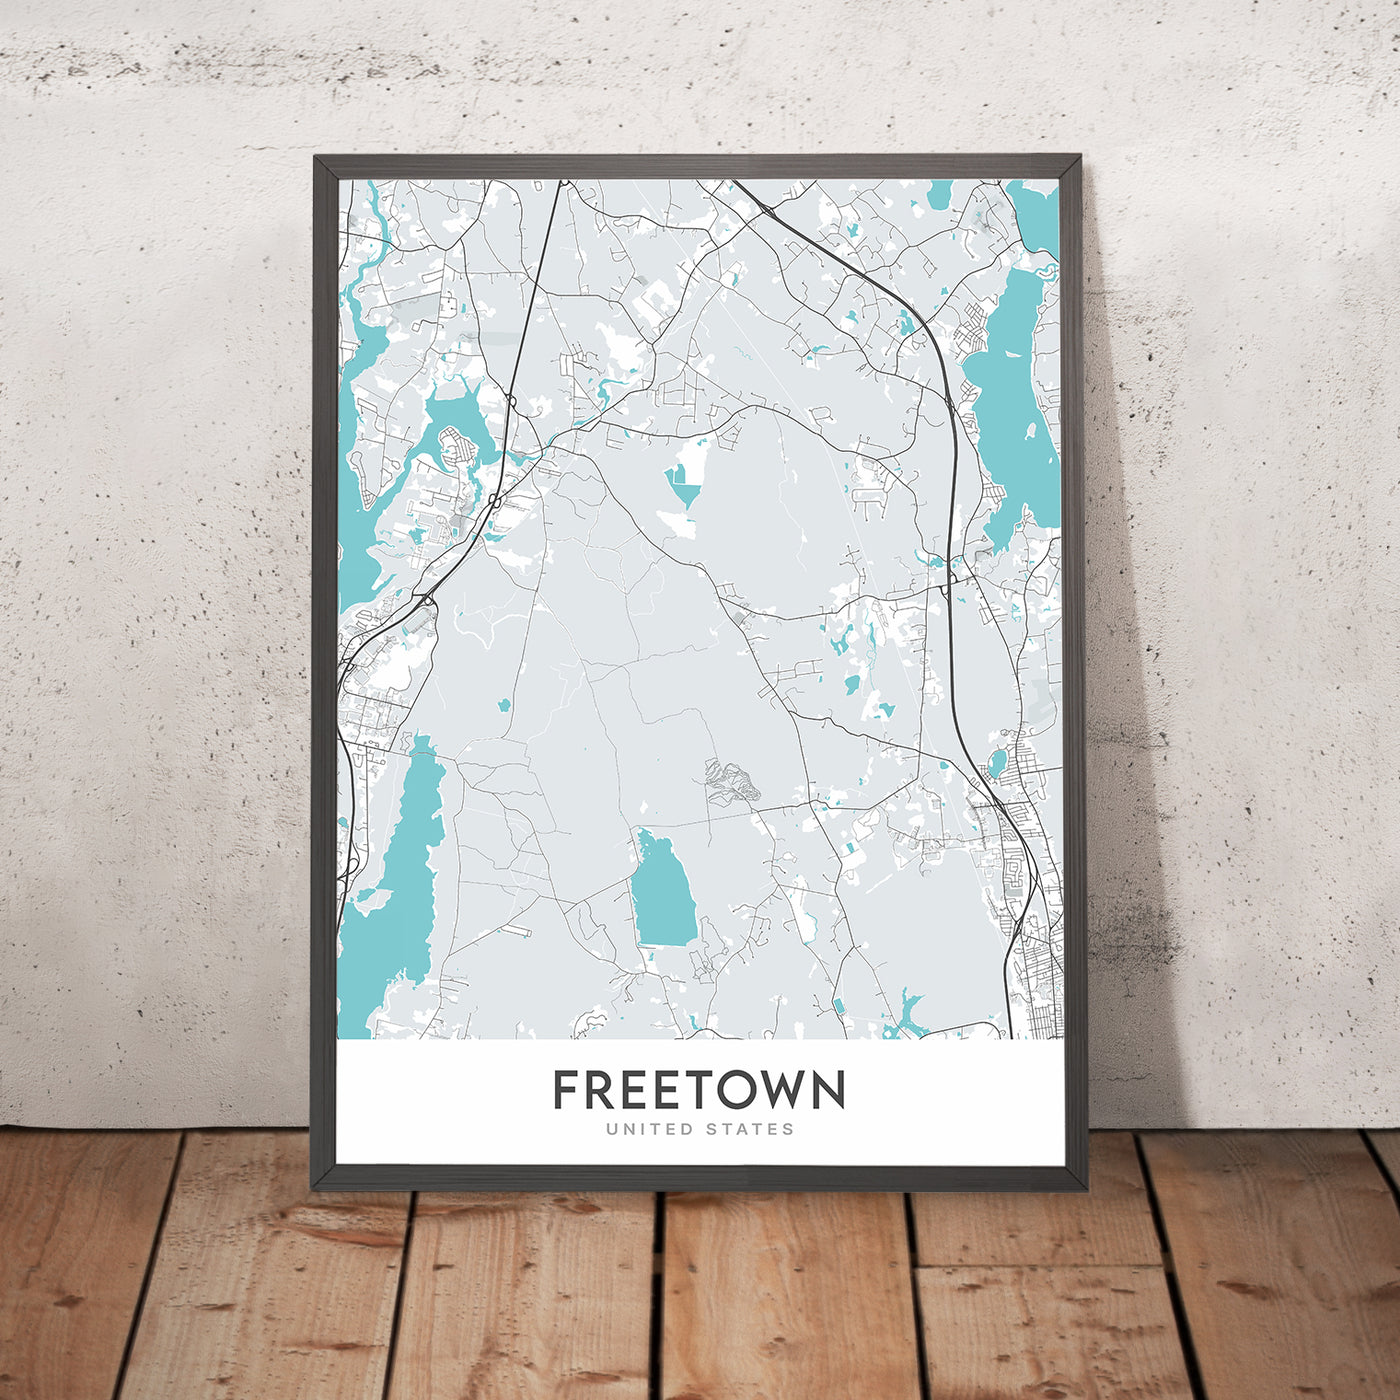 Modern City Map of Freetown, MA: Assonet River, Freetown State Forest, Lake Assawompset, US-44, MA-140